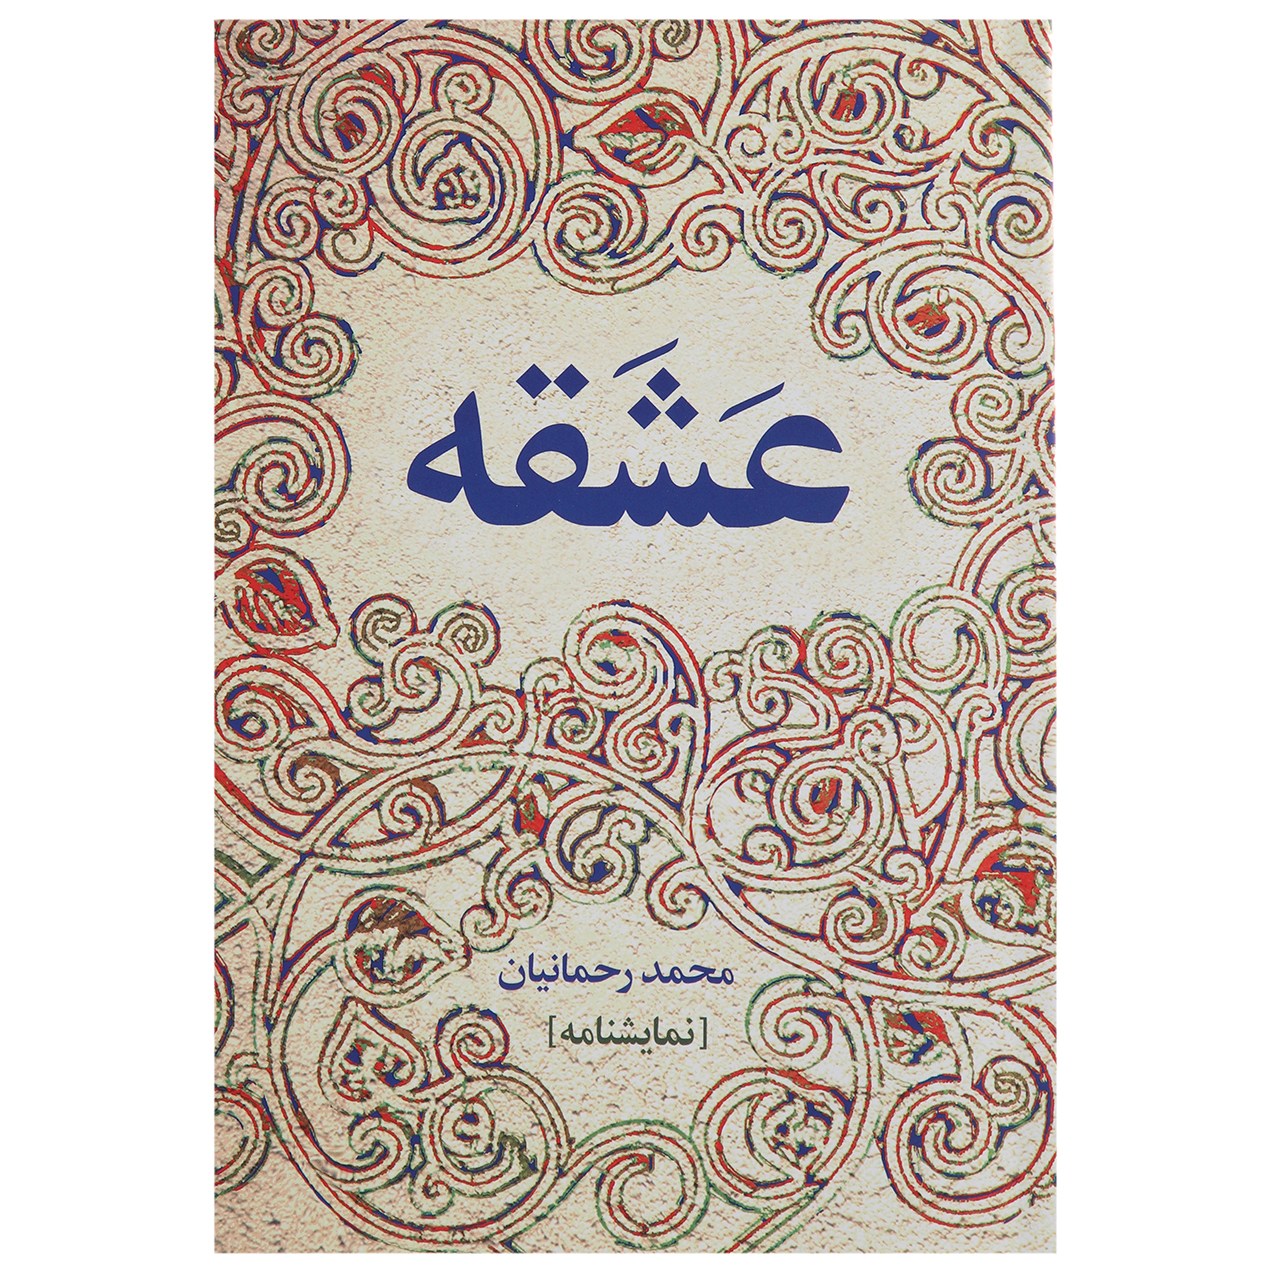 کتاب عشقه اثر محمد رحمانیان